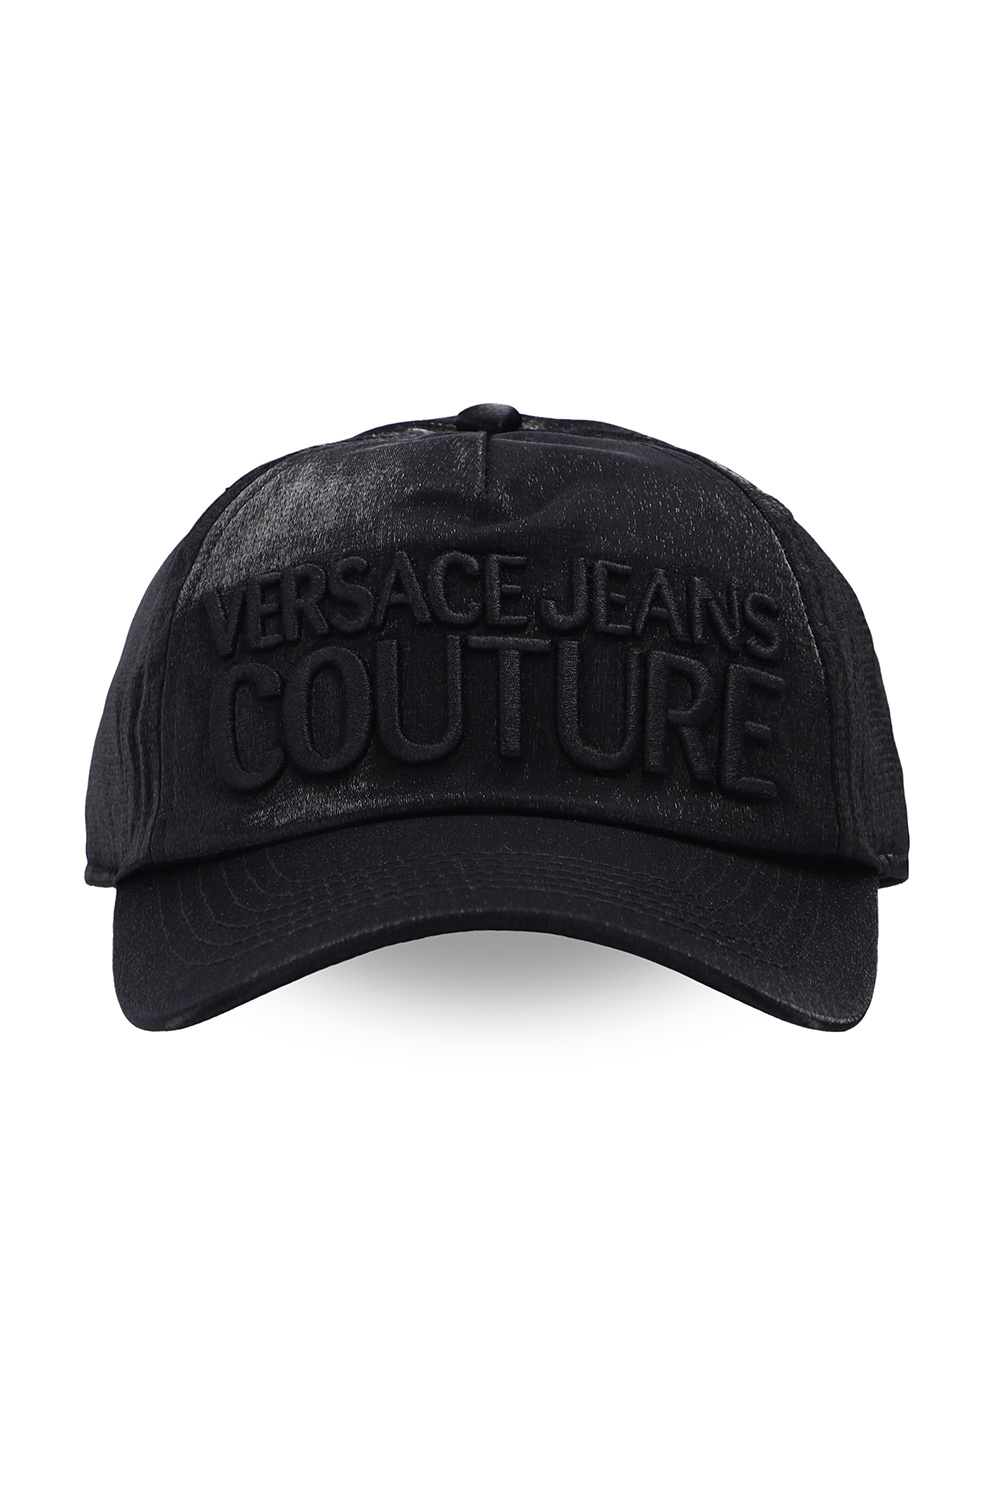 Versace Jeans Couture Cap KAPPA 308075 Charisma 18-3340